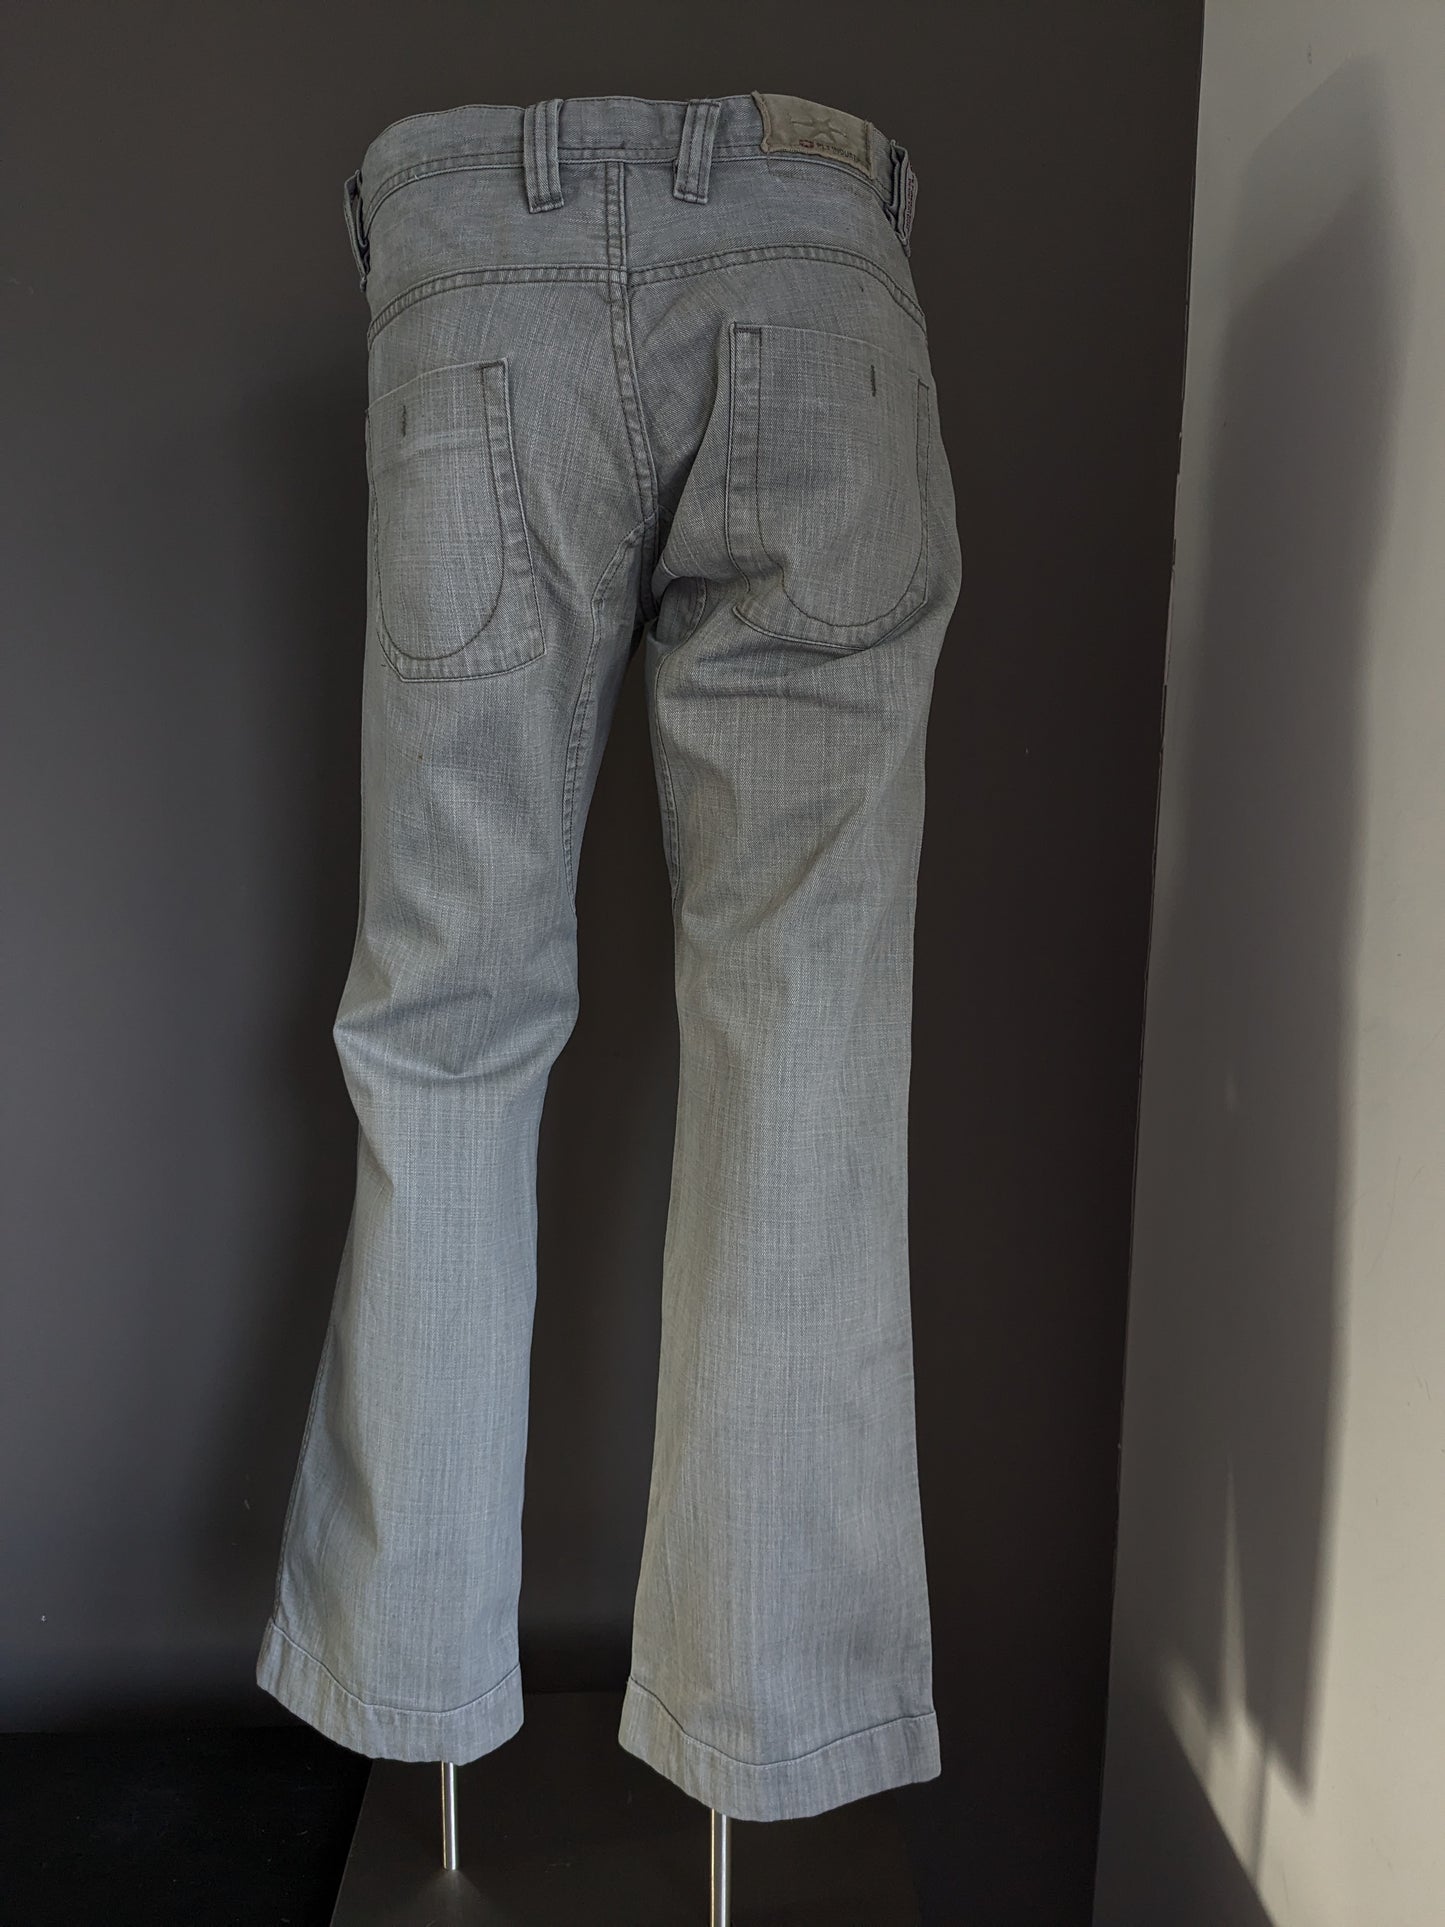 Jeans pilota industrie. Grigio. Taglia W32 - L32.